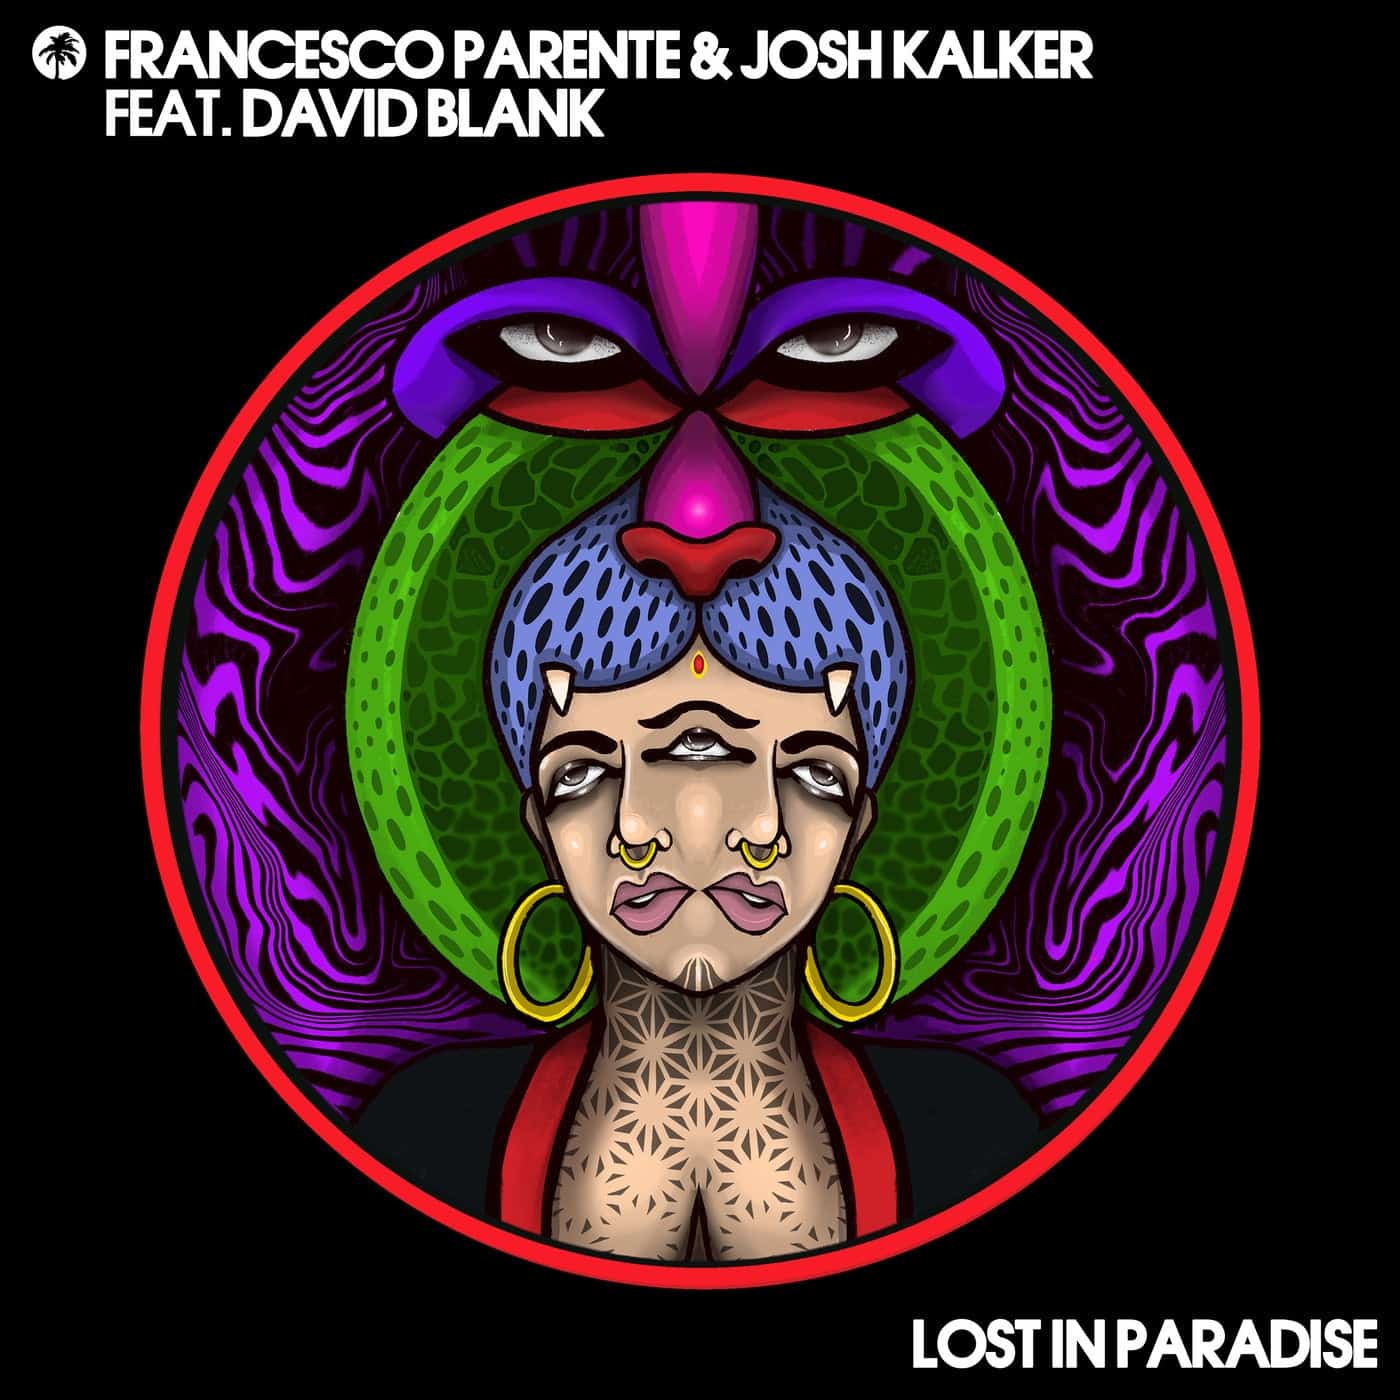 image cover: Francesco Parente, David Blank, Josh Kalker - Lost In Paradise / HOTC186